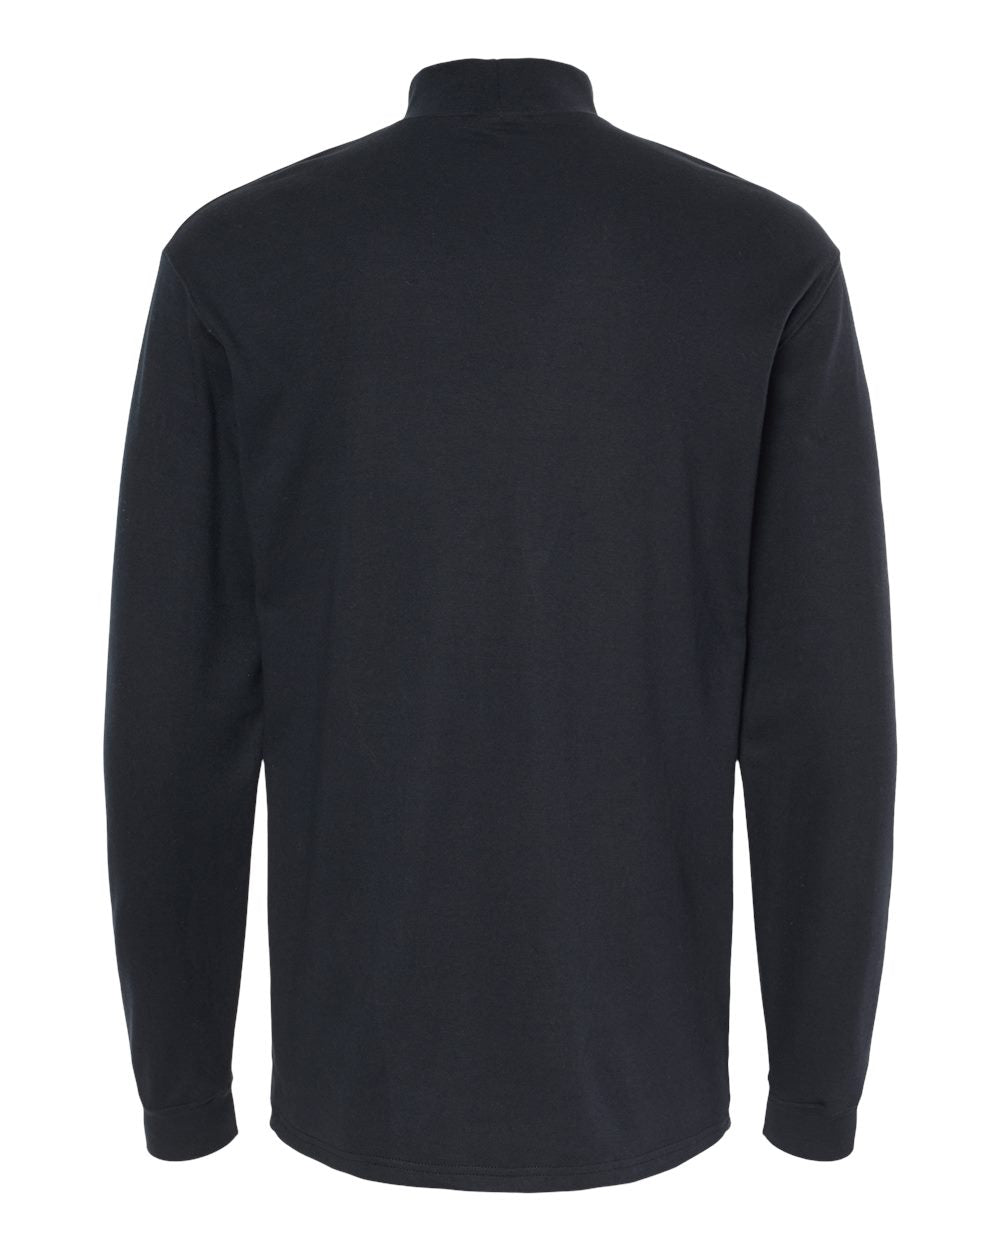 King Fashion Jersey Interlock Mockneck Long Sleeve T-Shirt KF4600 #color_Black